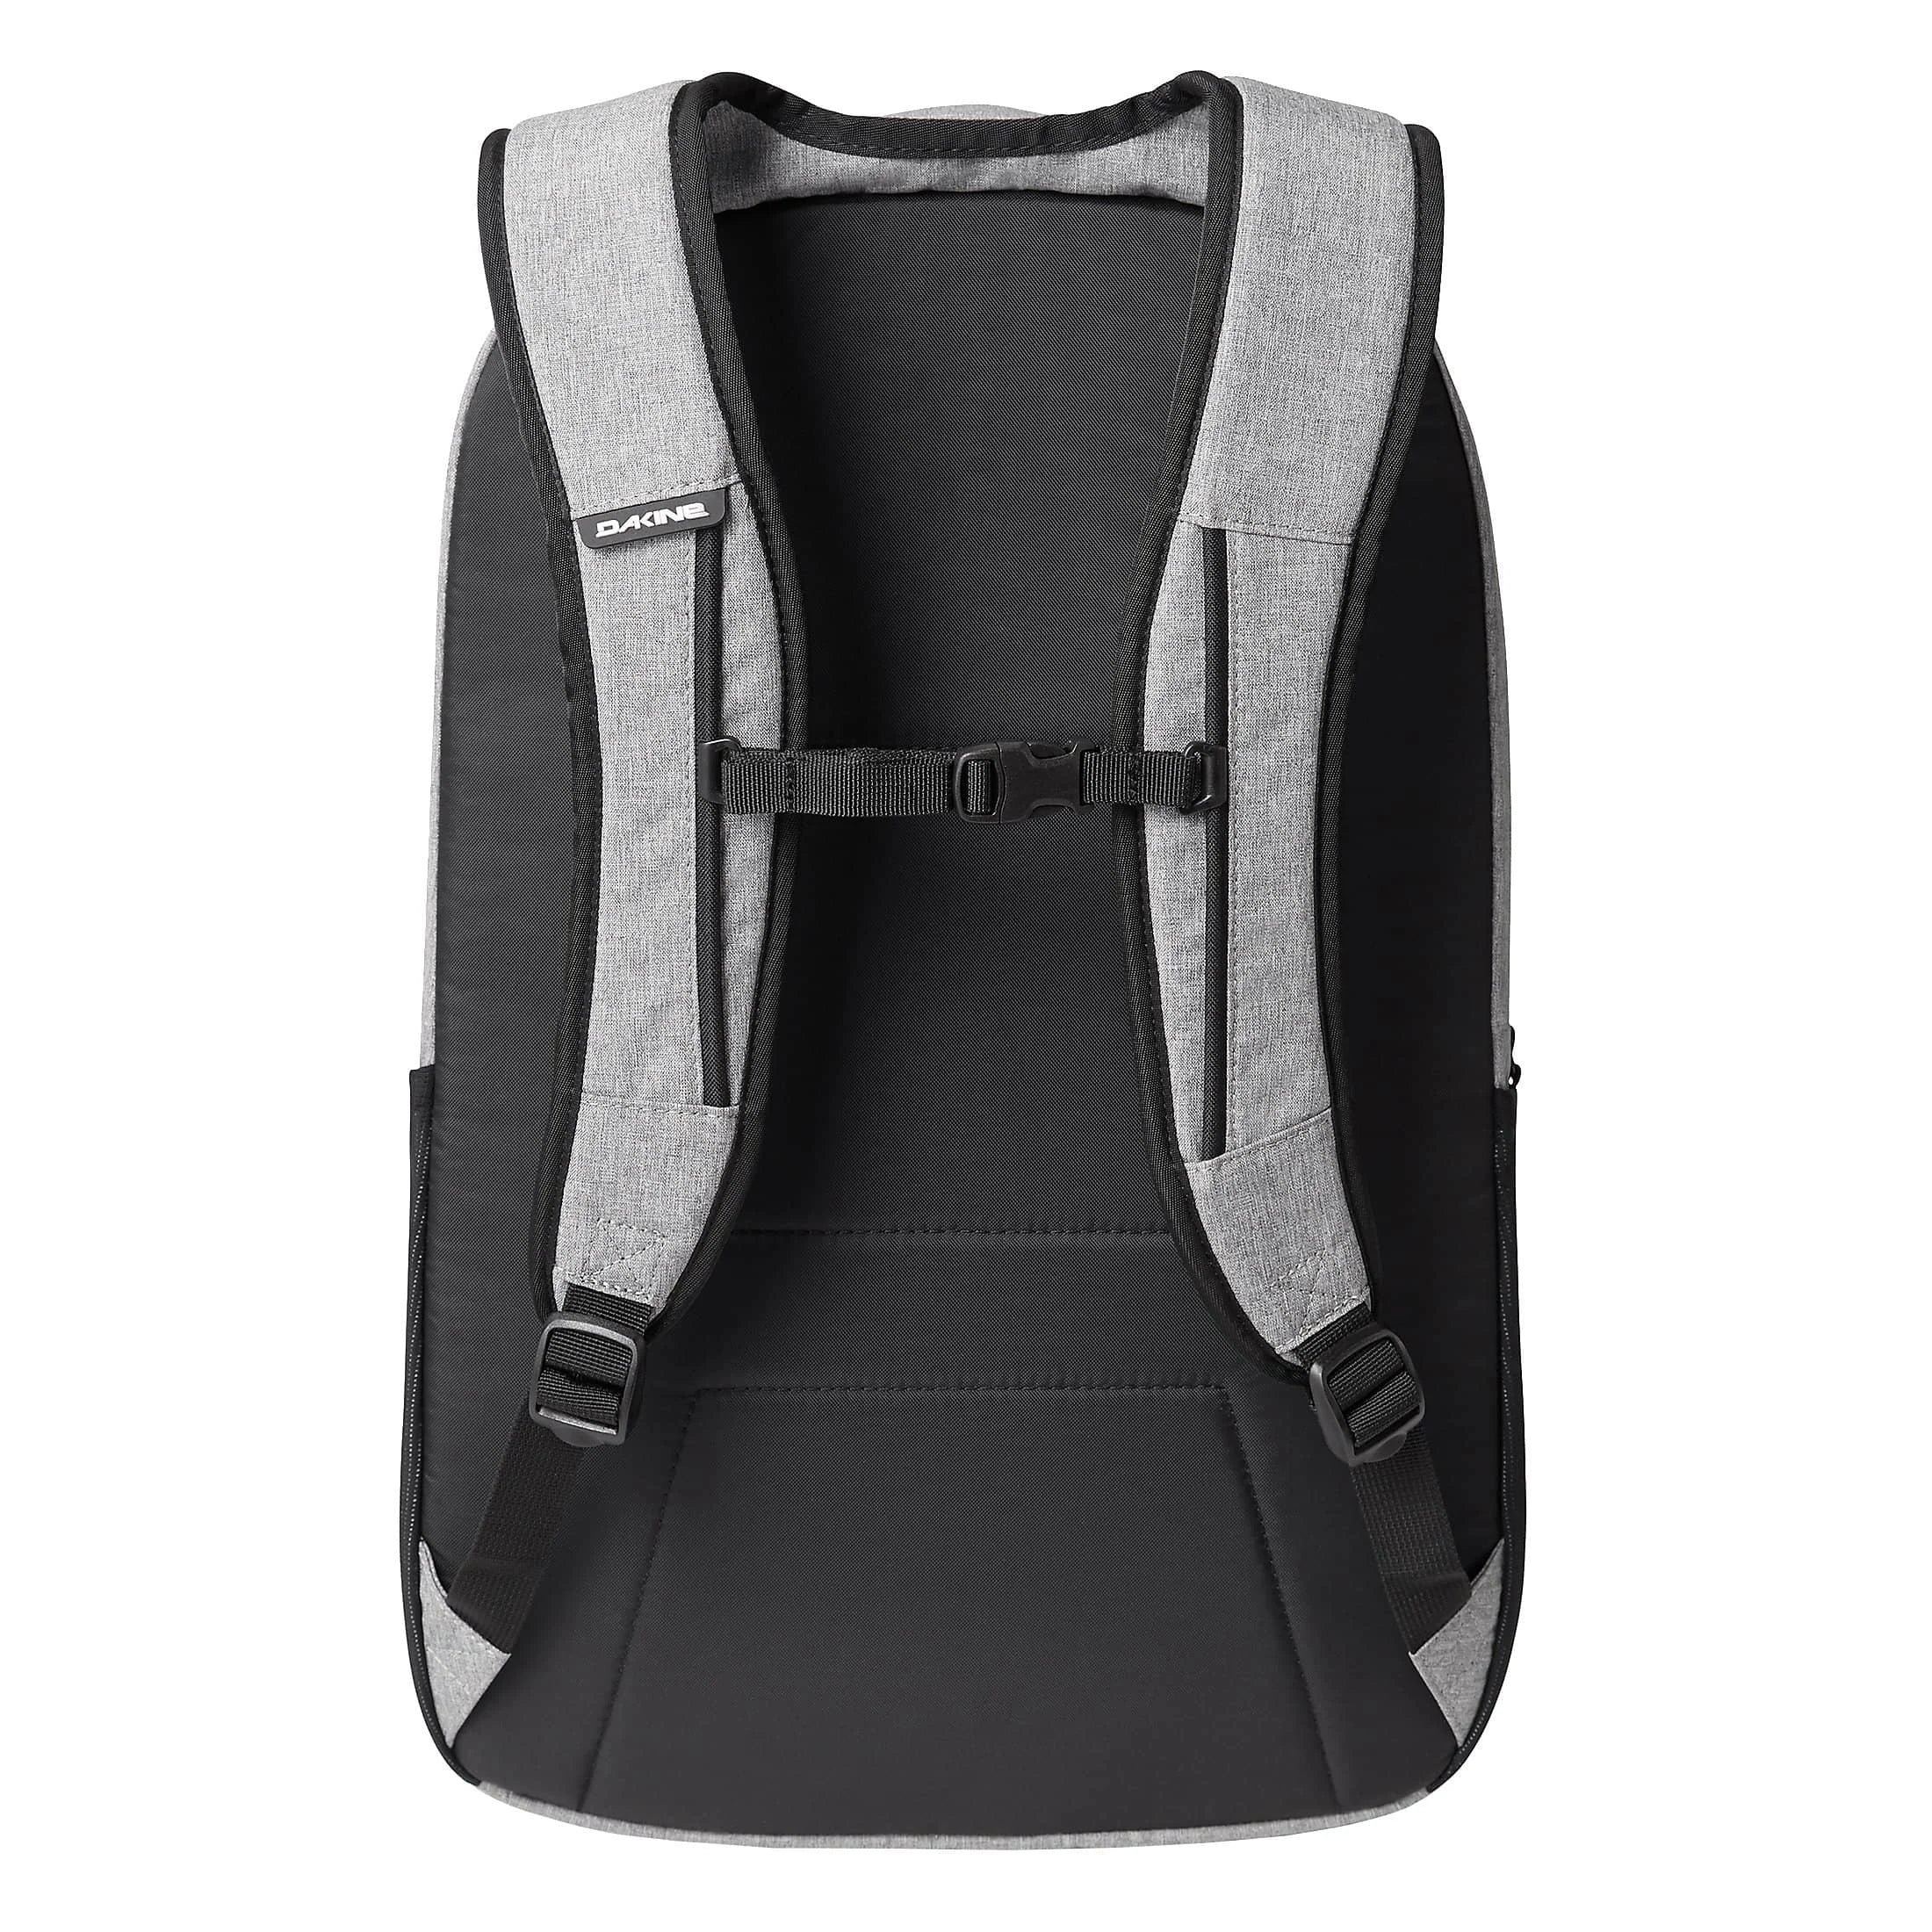 Dakine Packs & Bags Campus 33L Backpack 52 cm - black